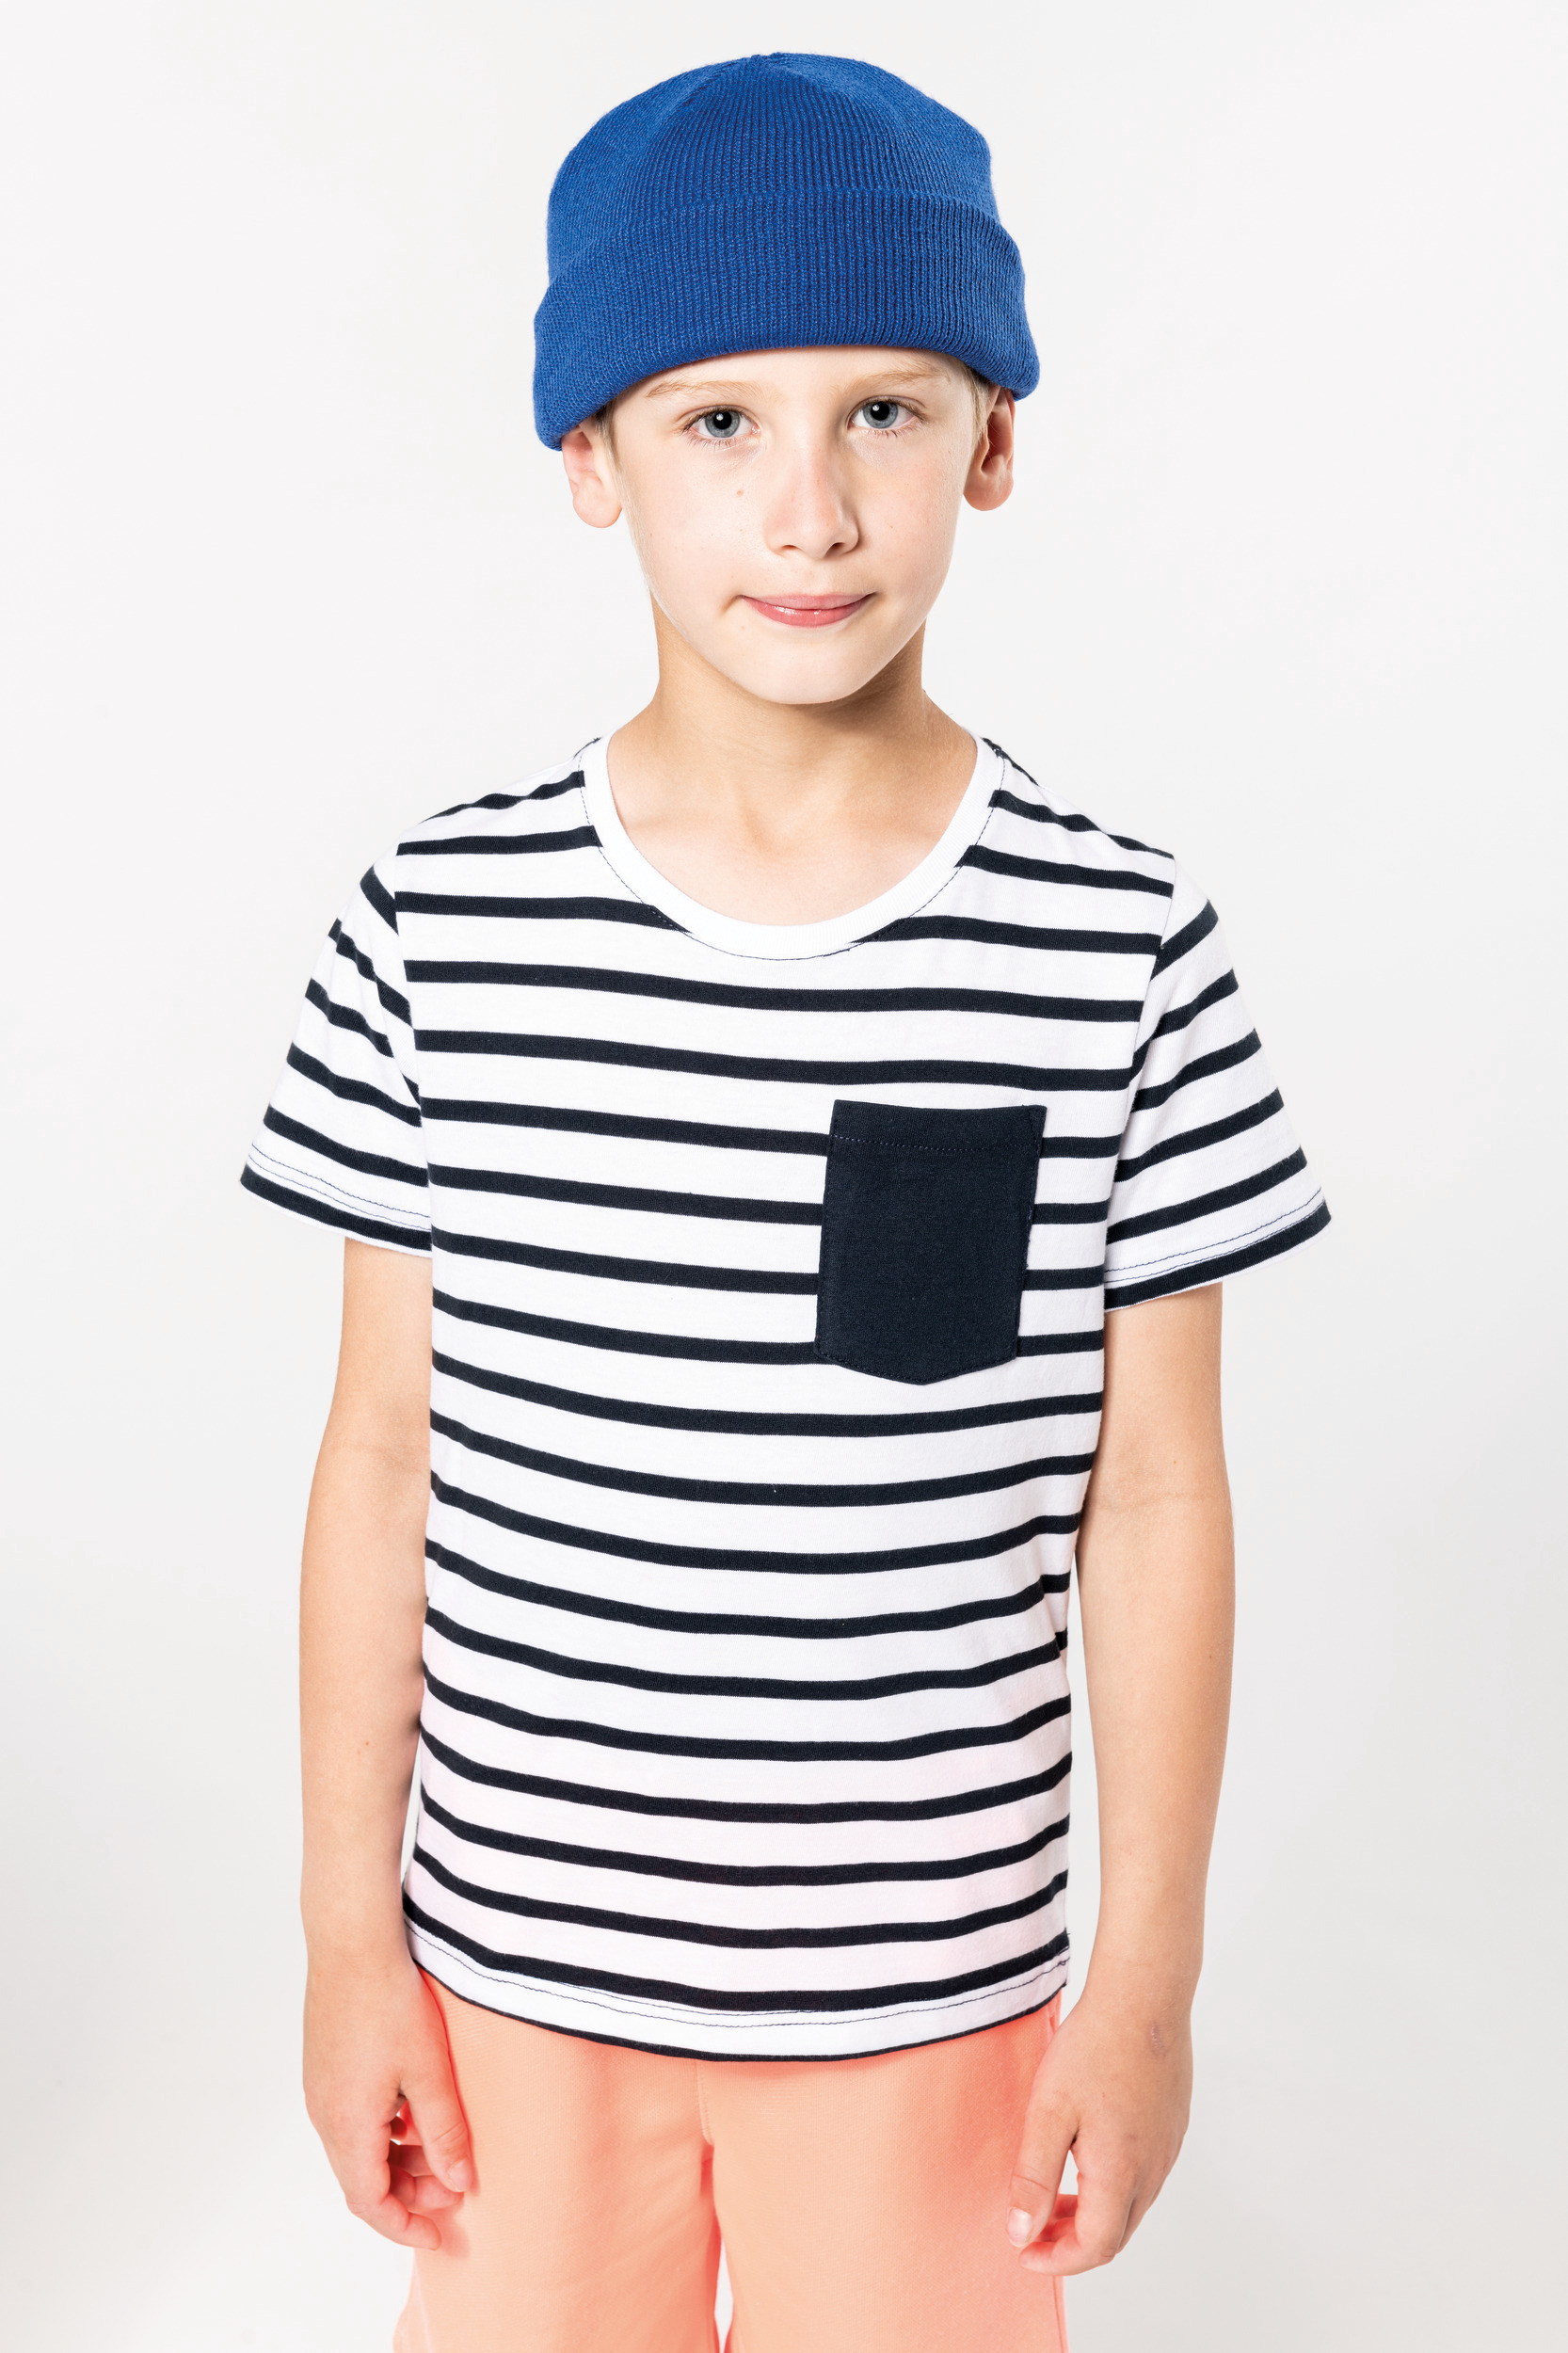 K379 - Camiseta Marinero a rayas con bolsillo manga corta para niños